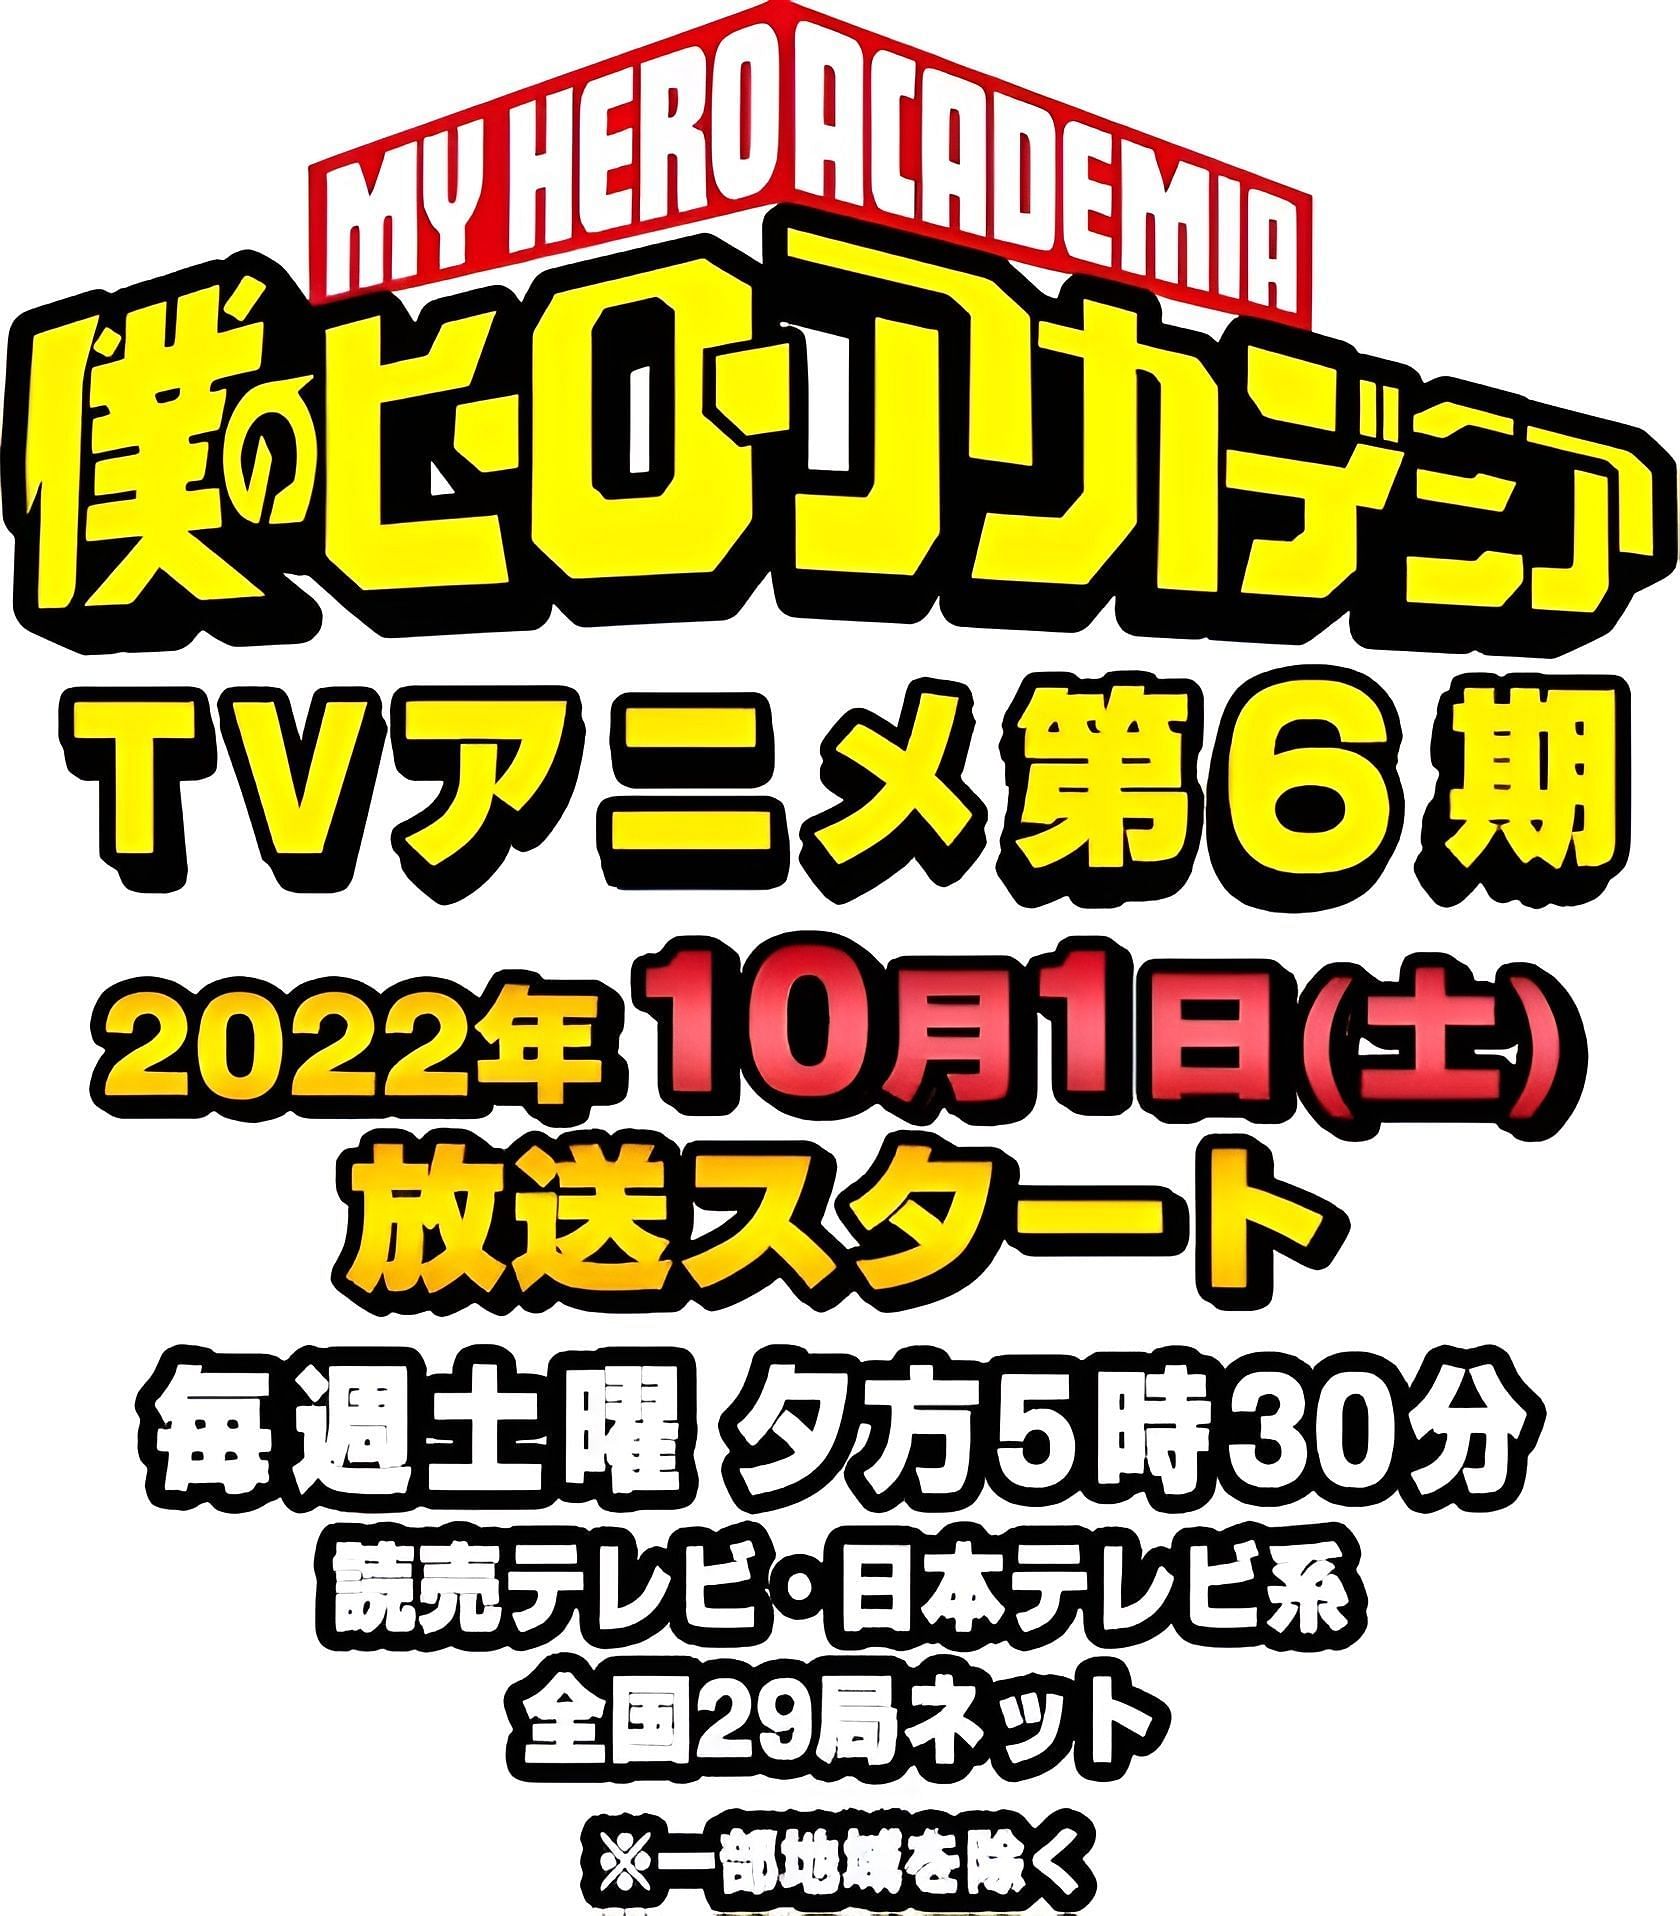 Japanese TV broadcast time confirmation (Image via Heroaca.com)